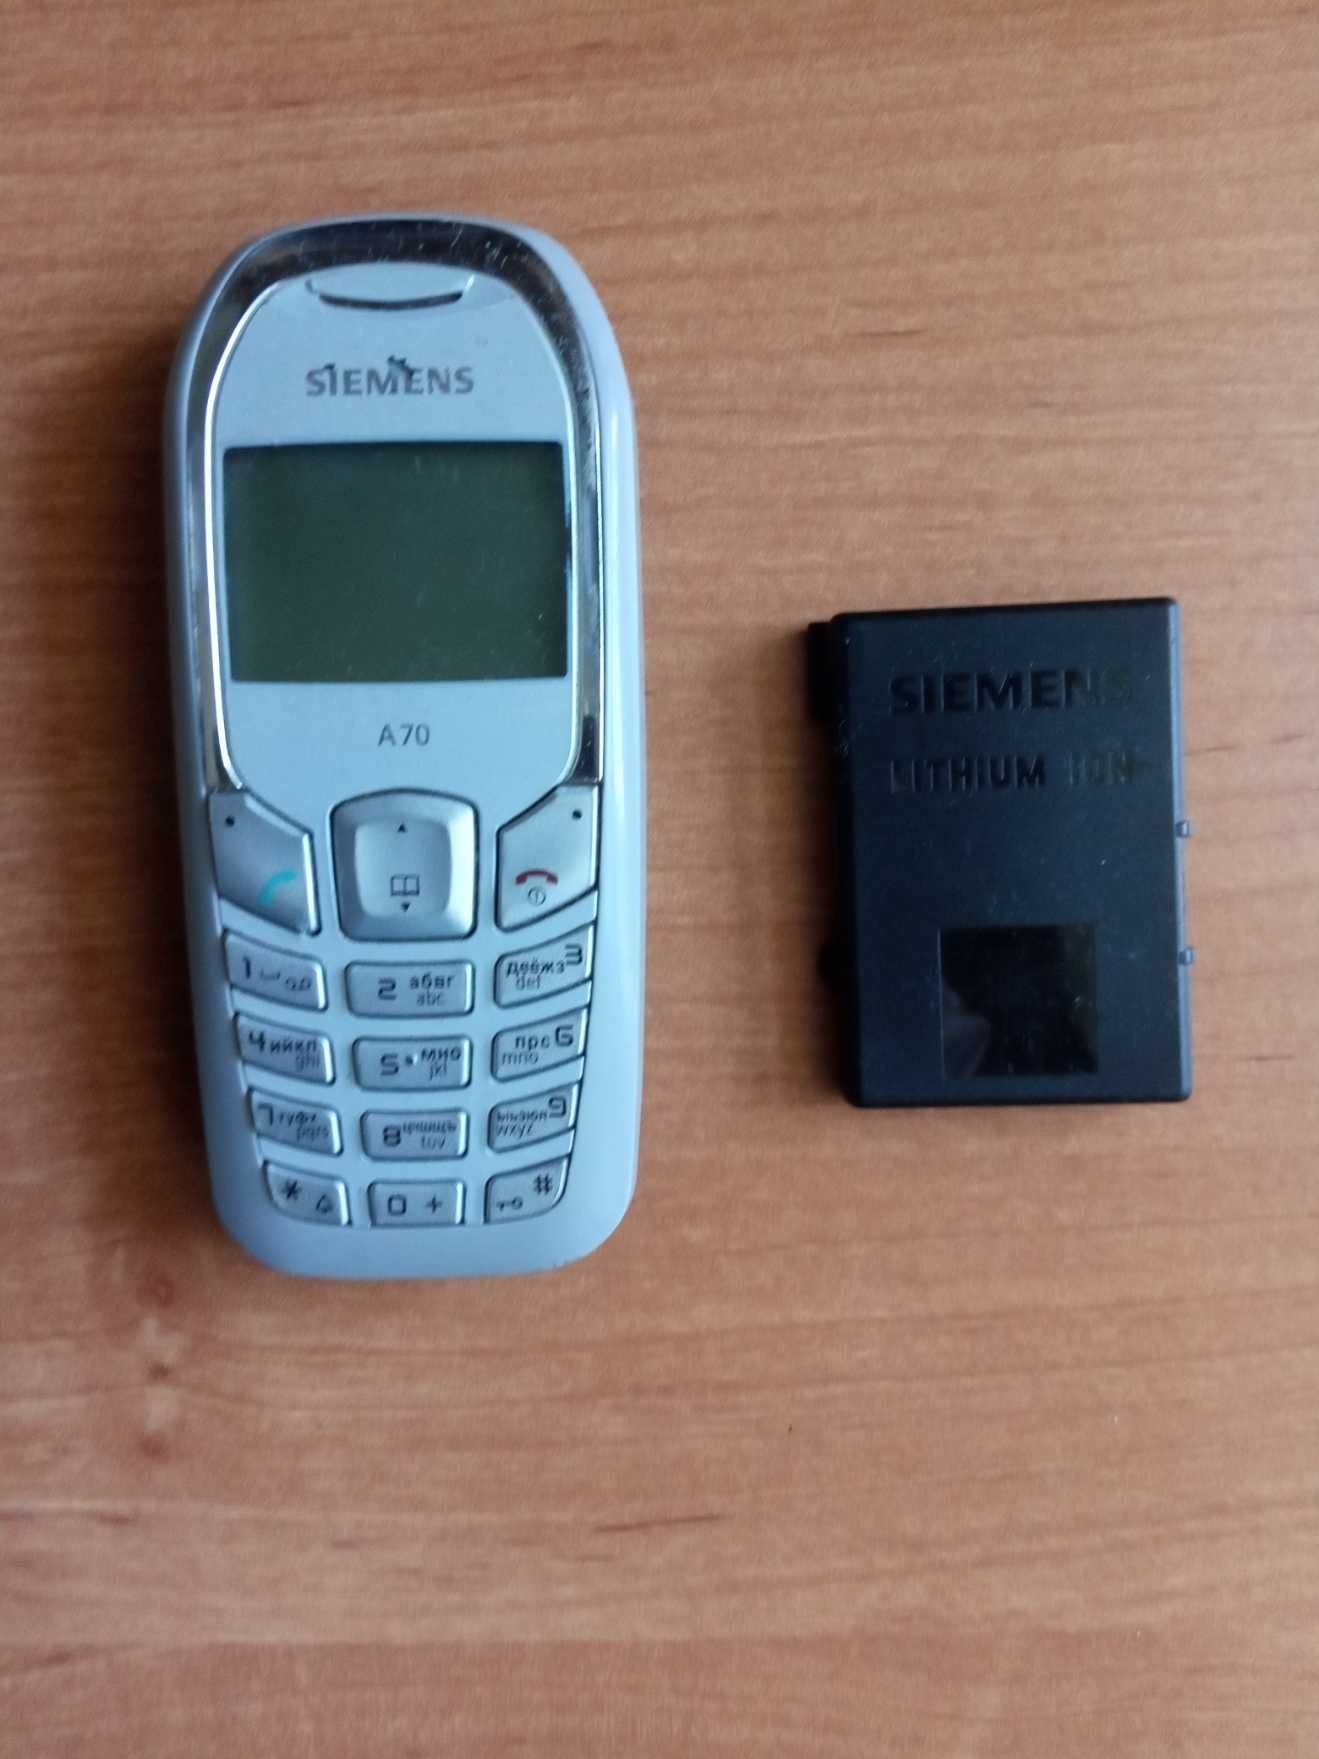 Мобільні телефони Samsung GT-E1080 і Siemens A70